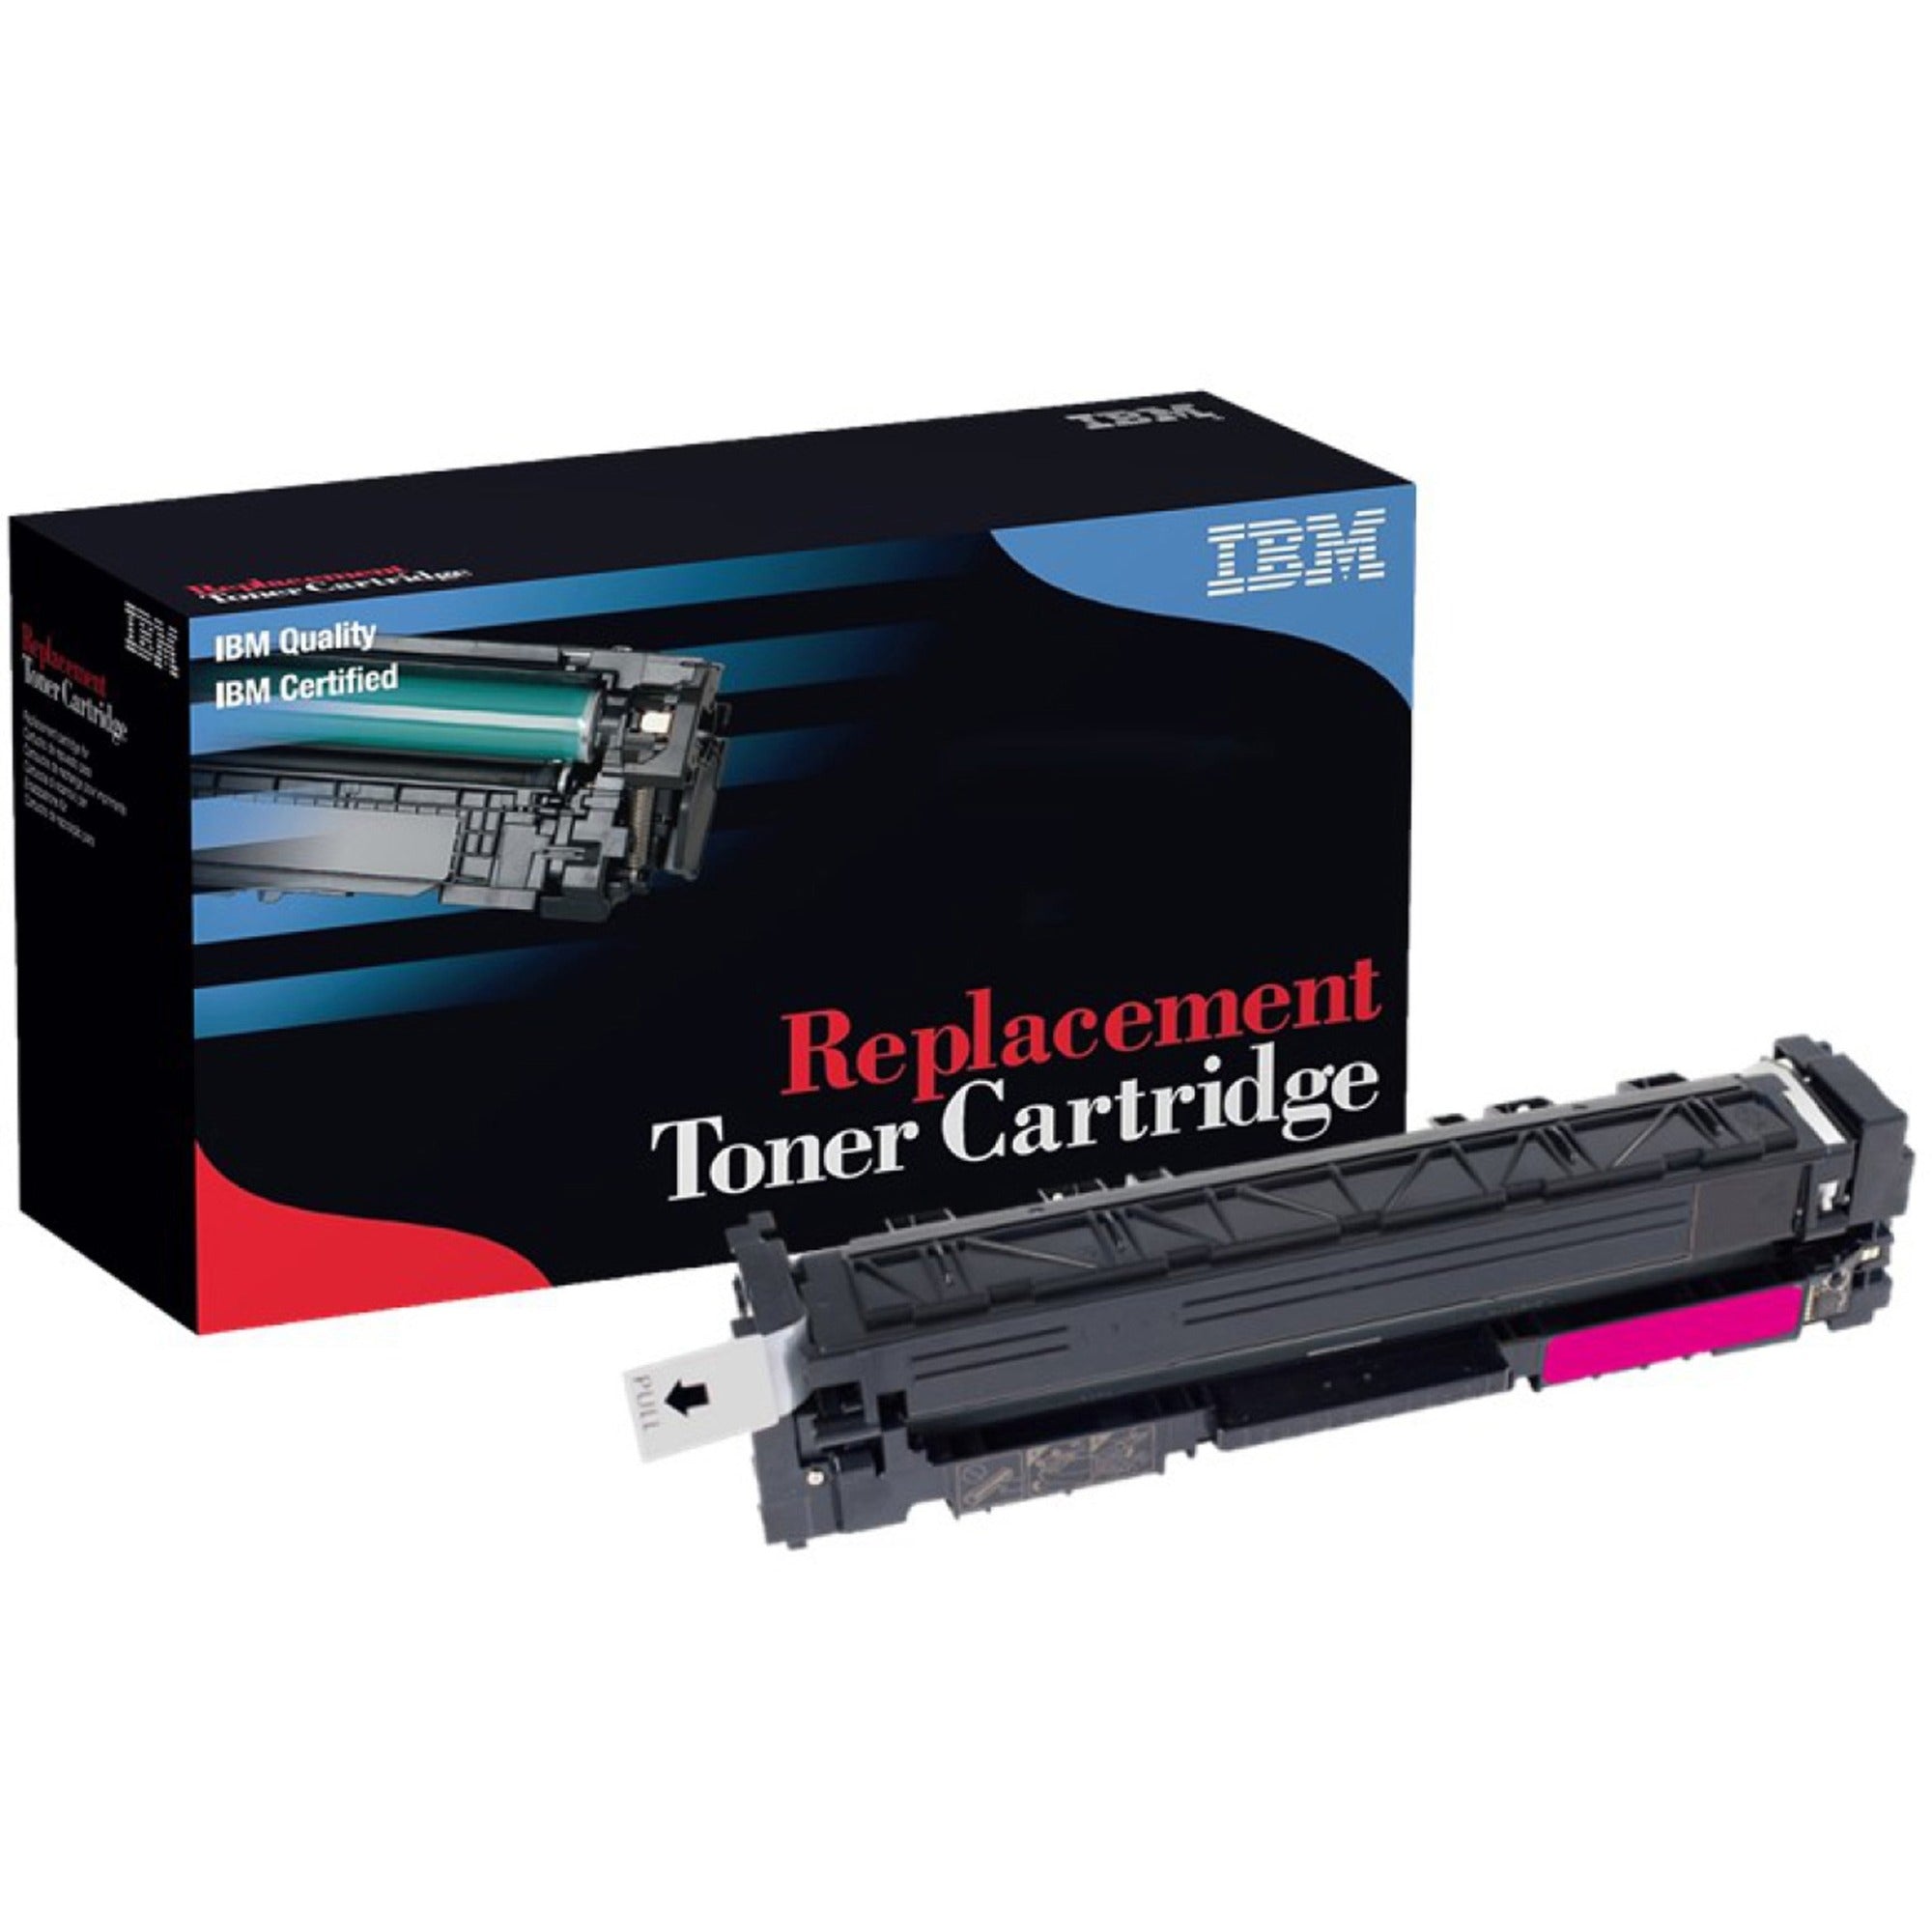 ibm-laser-toner-cartridge-alternative-for-hp-655a-cf453a-magenta-1-each-10500-pages_ibmtg95p6697 - 1